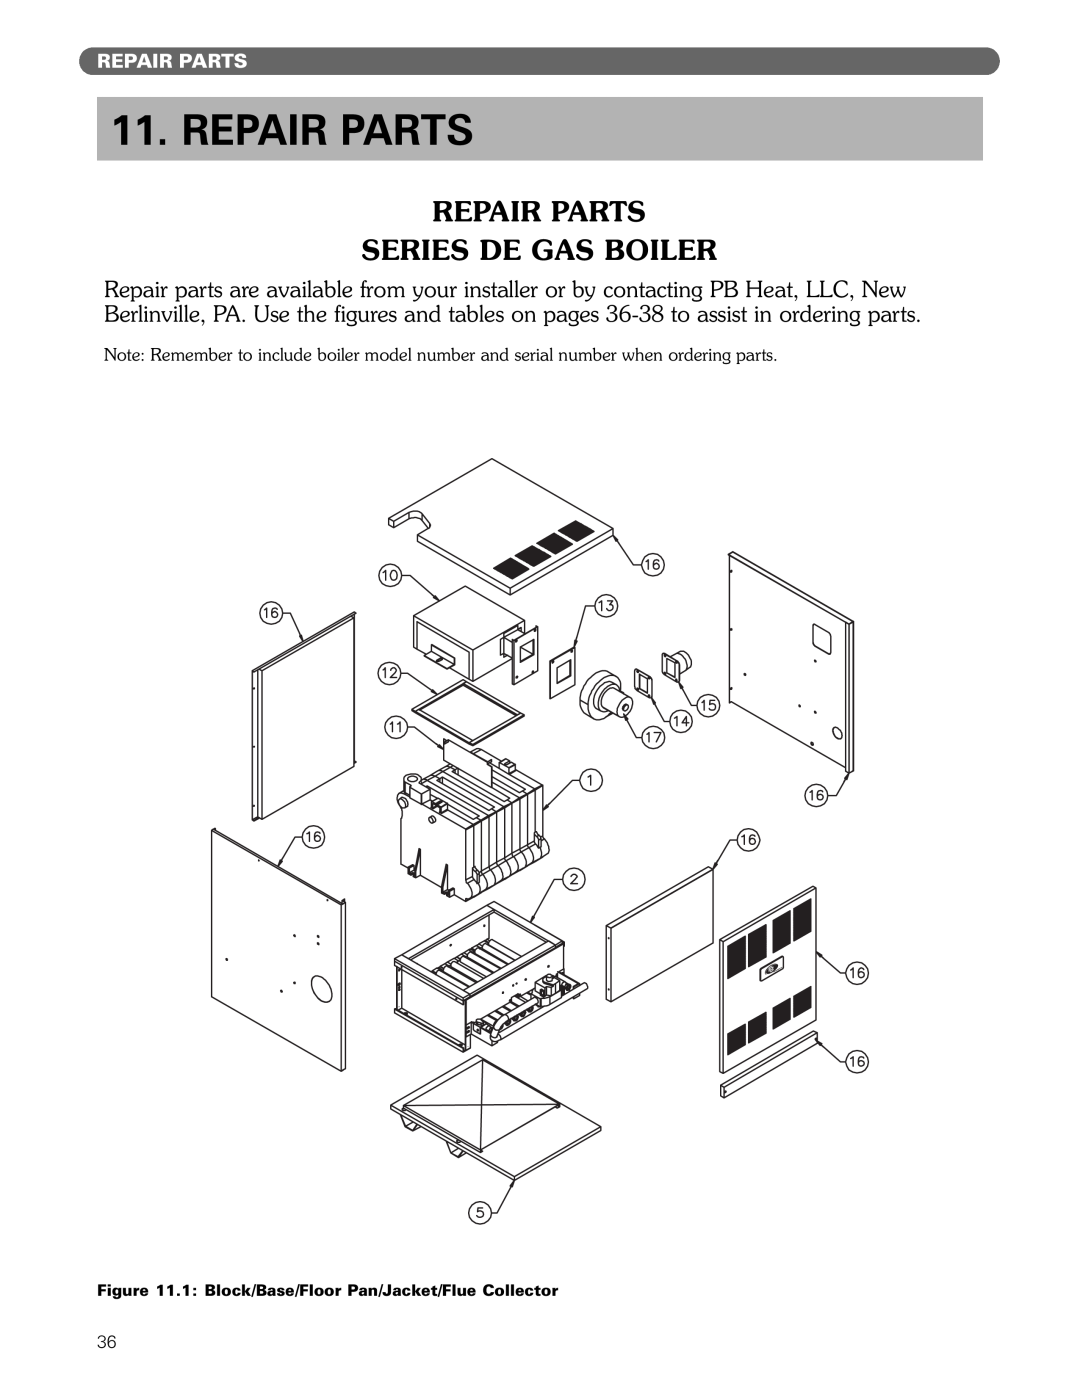 PB Heat DE manual Repair Parts Series De Gas Boiler 